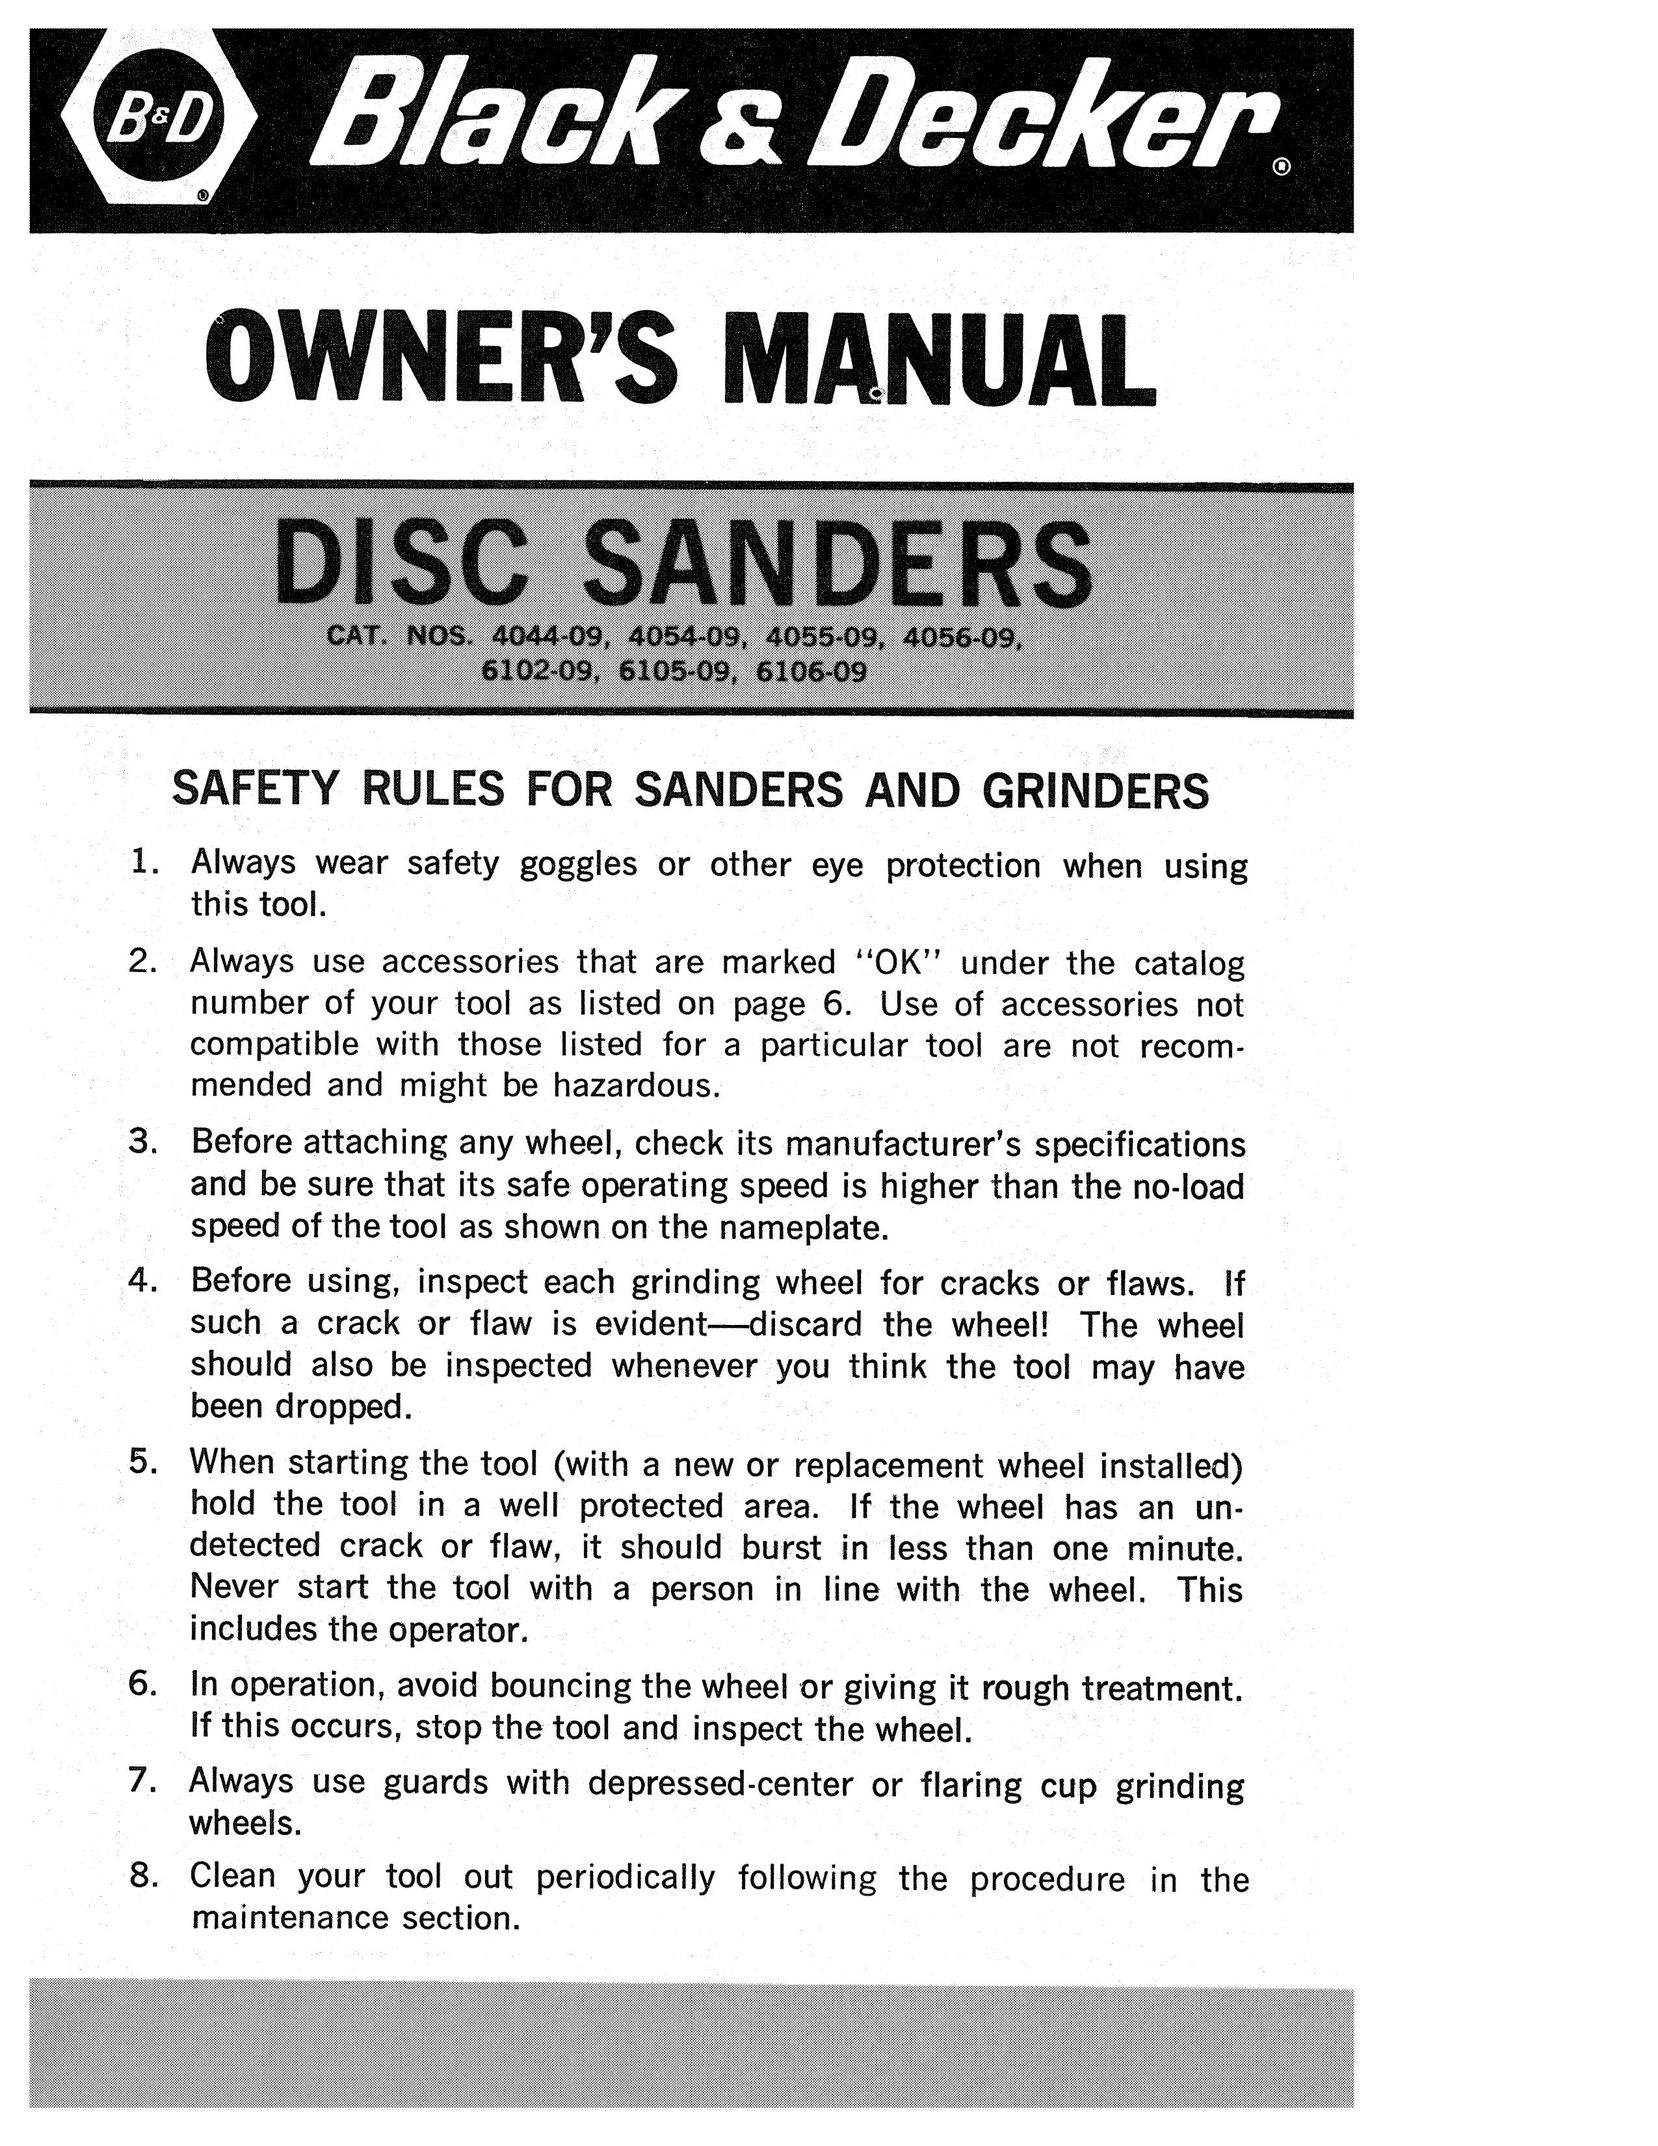 Black & Decker 4054-09 Sander User Manual